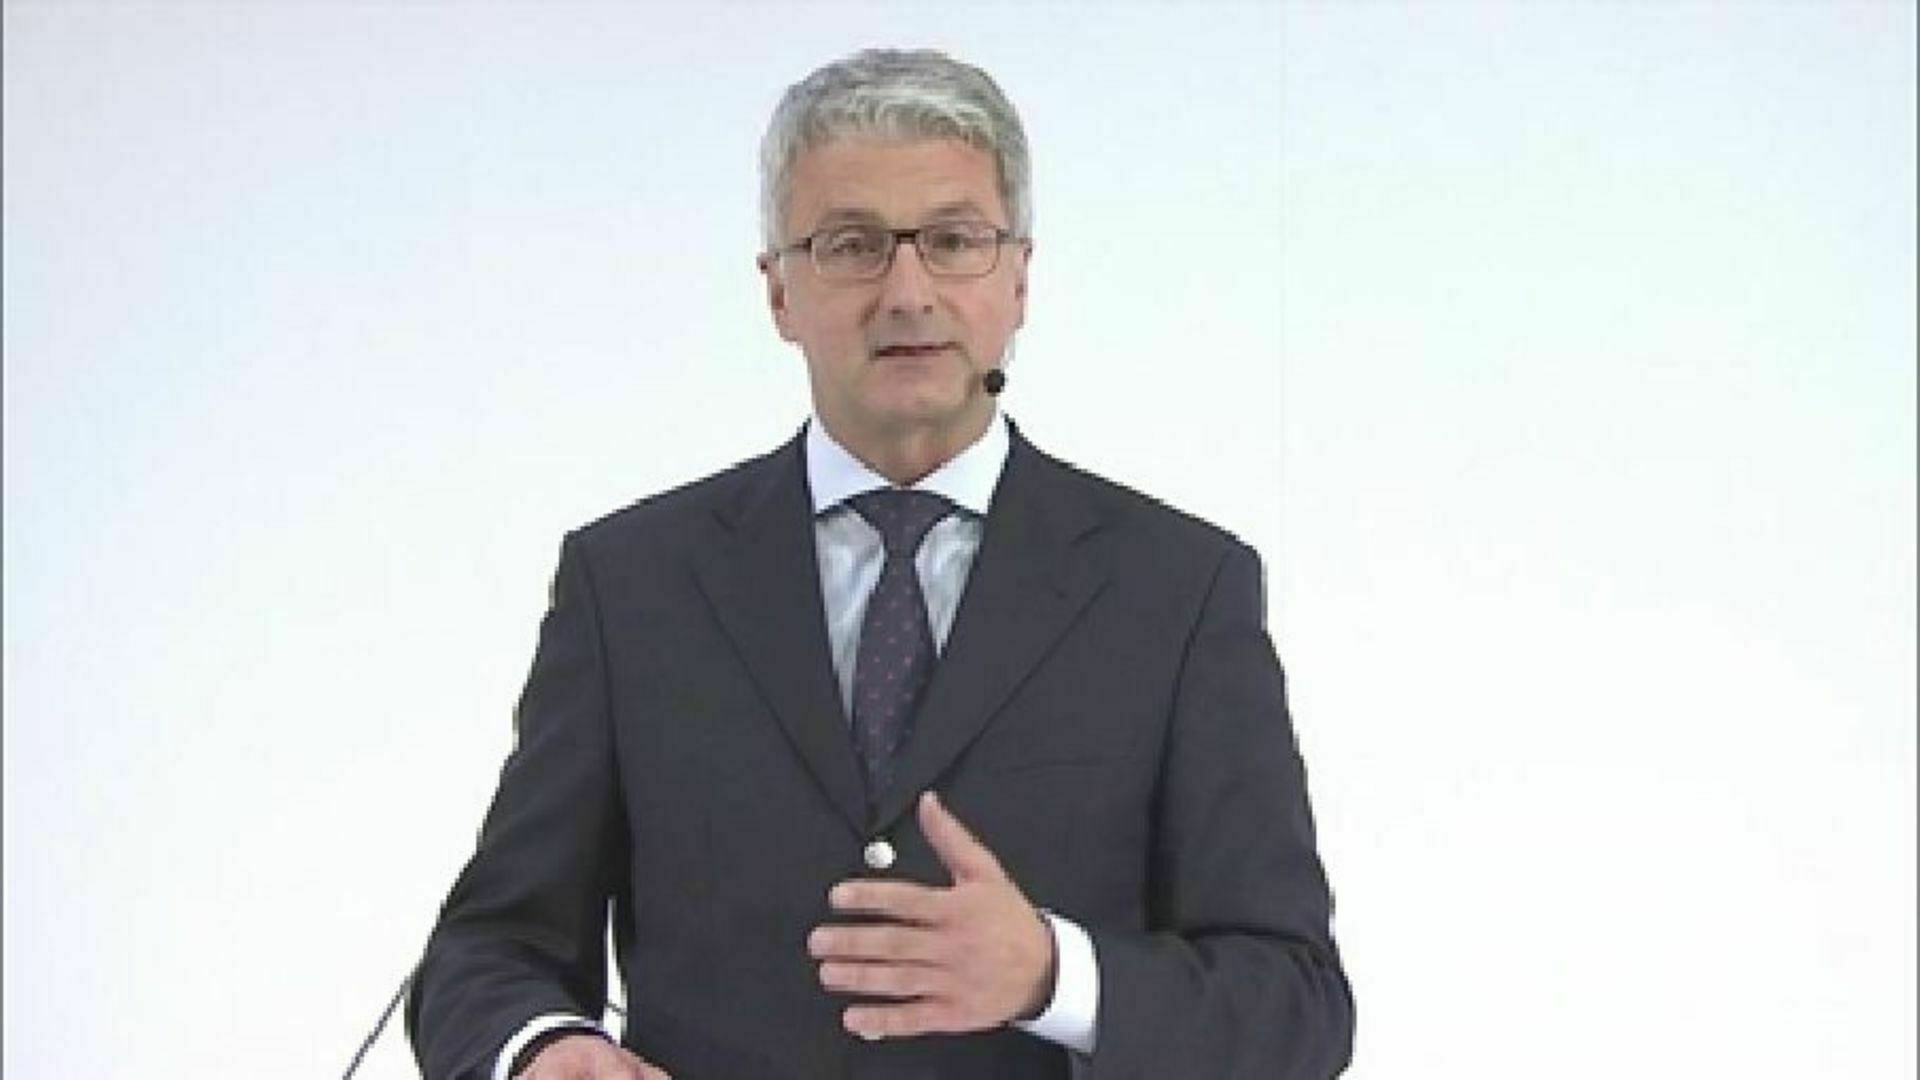 Audi introduces the “Urban Agenda”